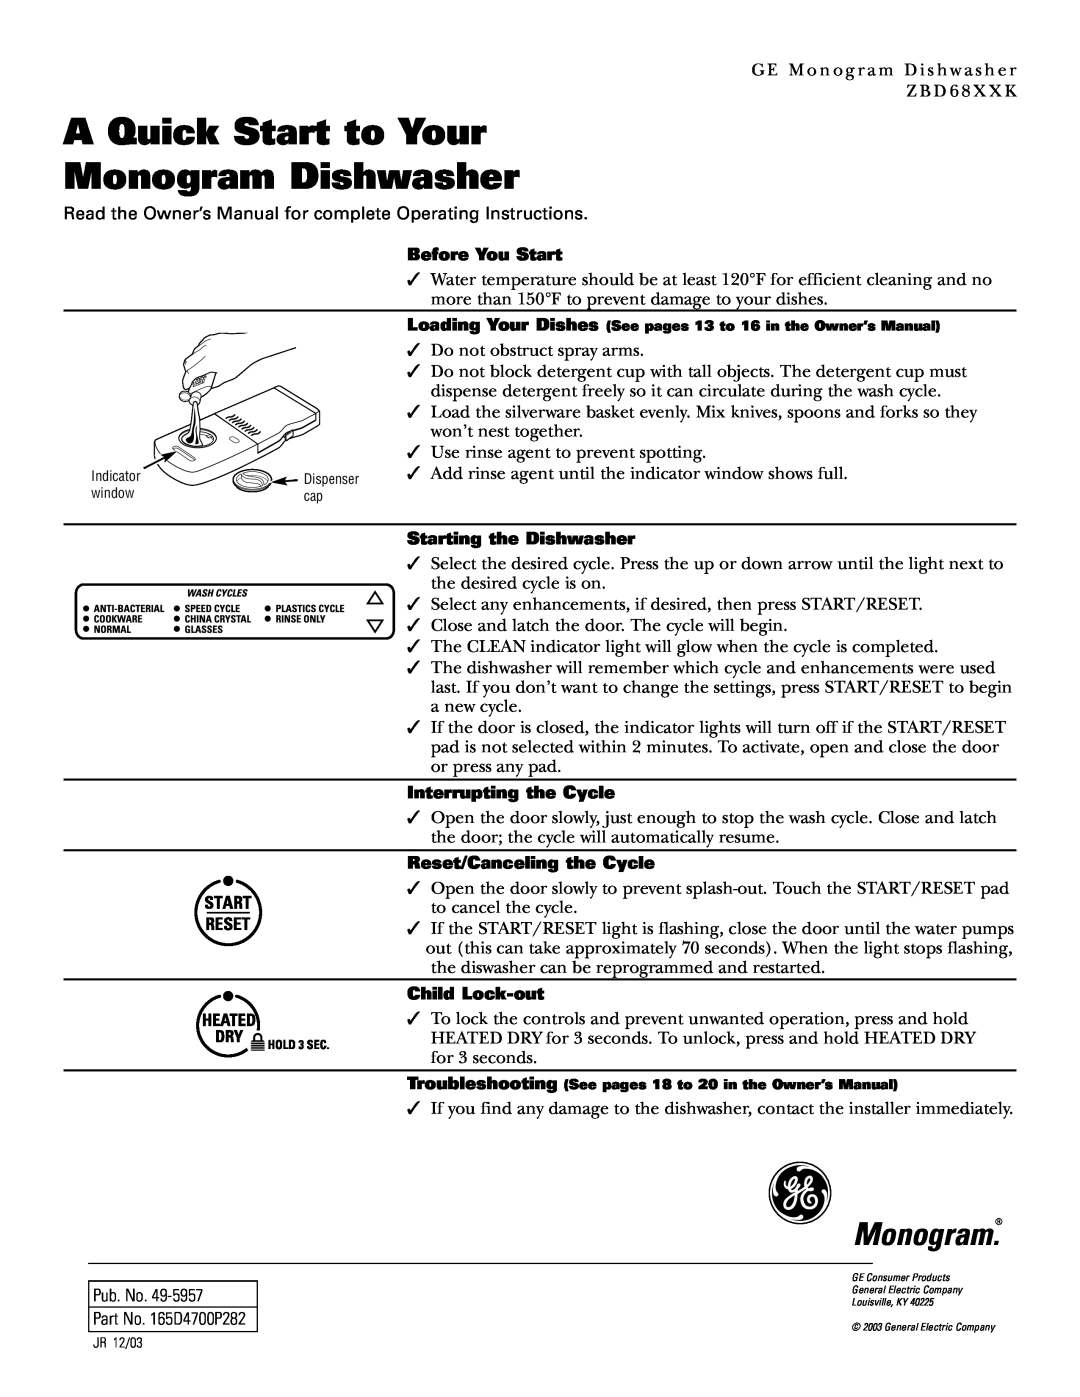 GE Monogram ZBD68XXK quick start A Quick Start to Your Monogram Dishwasher, Before You Start, Starting the Dishwasher 